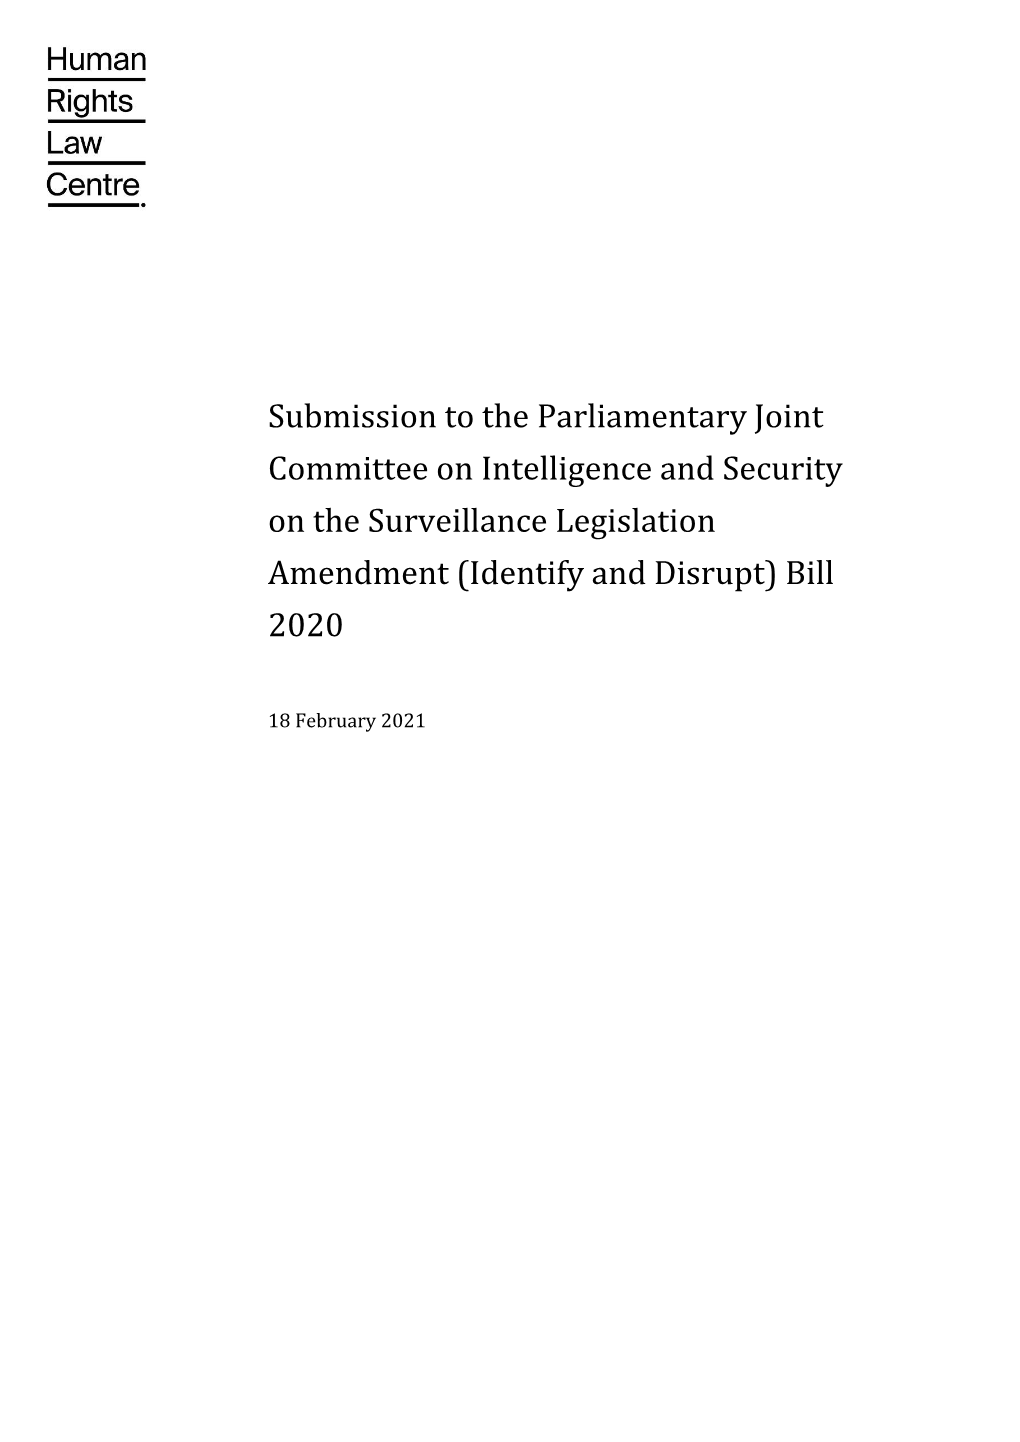 Surveillance Legislation Amendment (Identify and Disrupt) Bill 2020